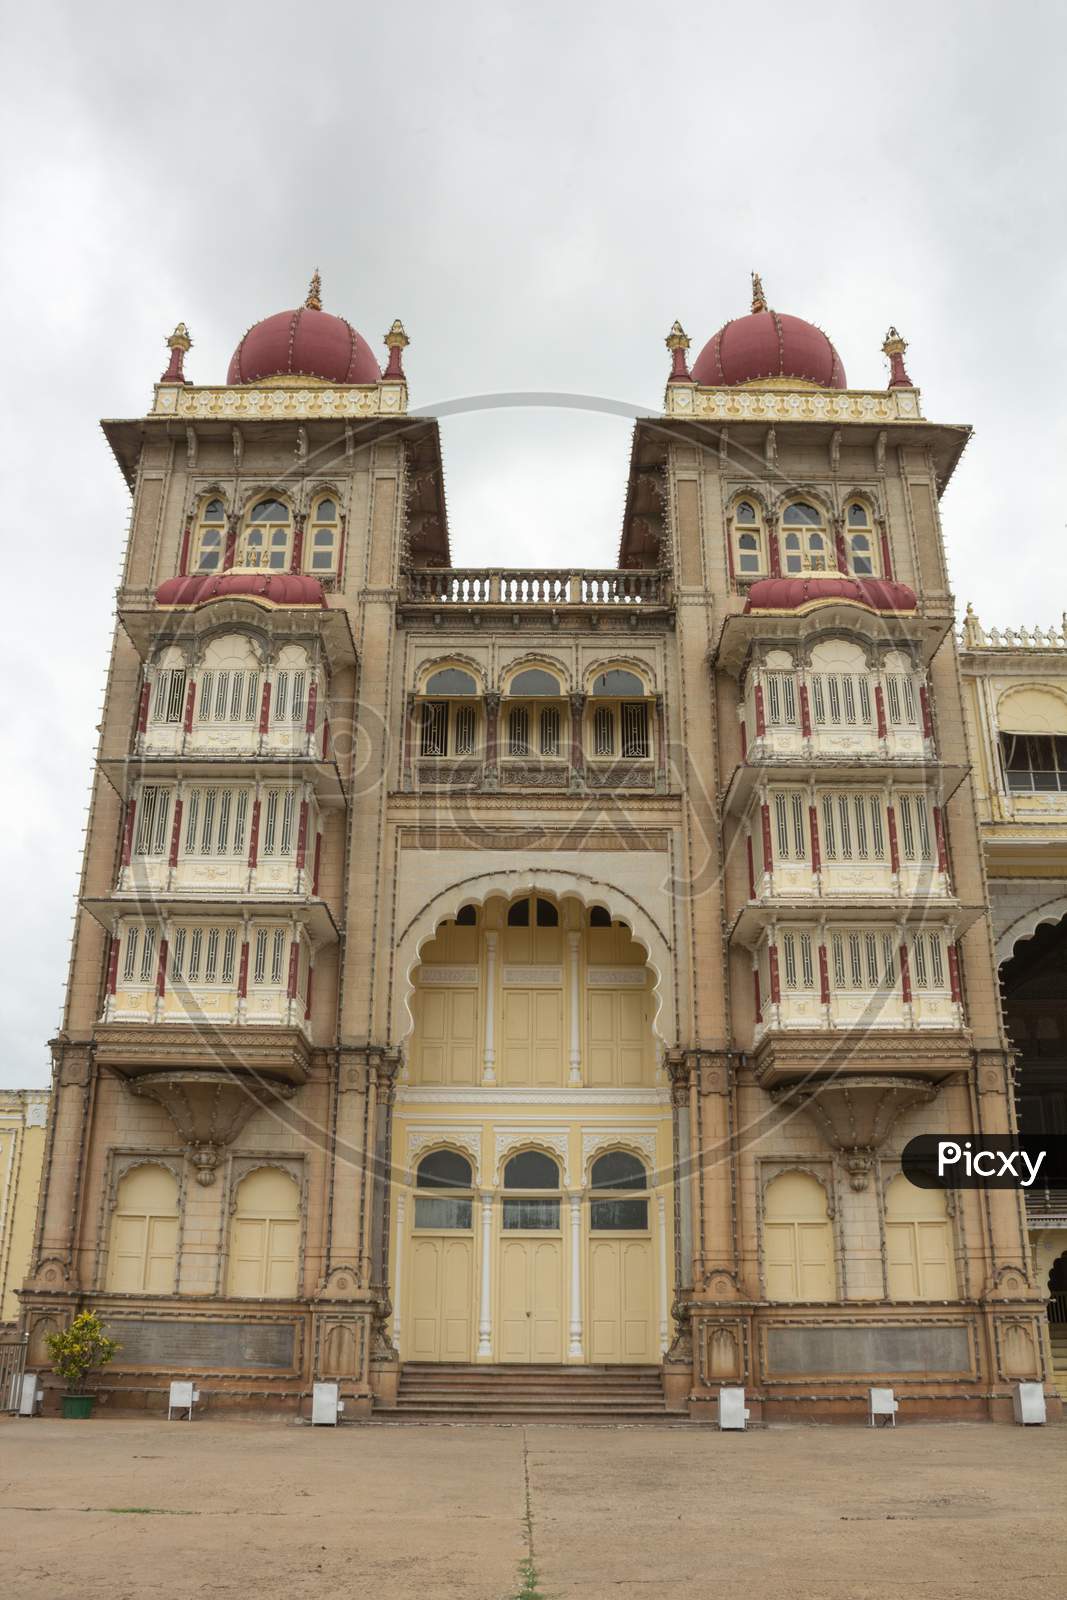 Queen's Window in Mysore Palace in Karnataka/India.